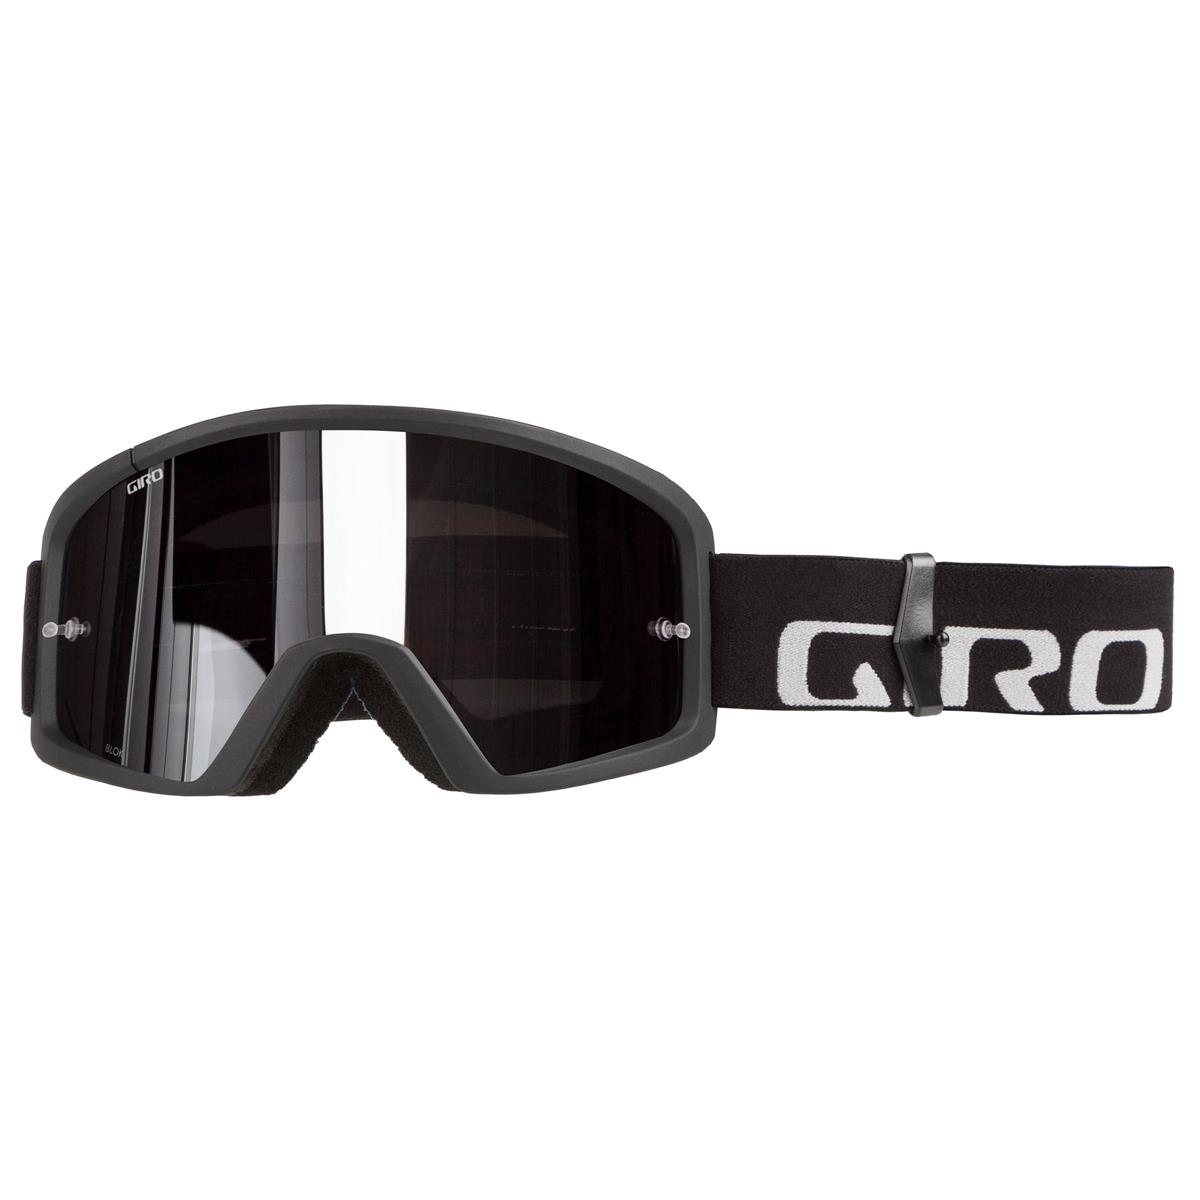 Giro Maschera Blok Black/Grey - Grey/Silver Flash Clear Anti-Fog